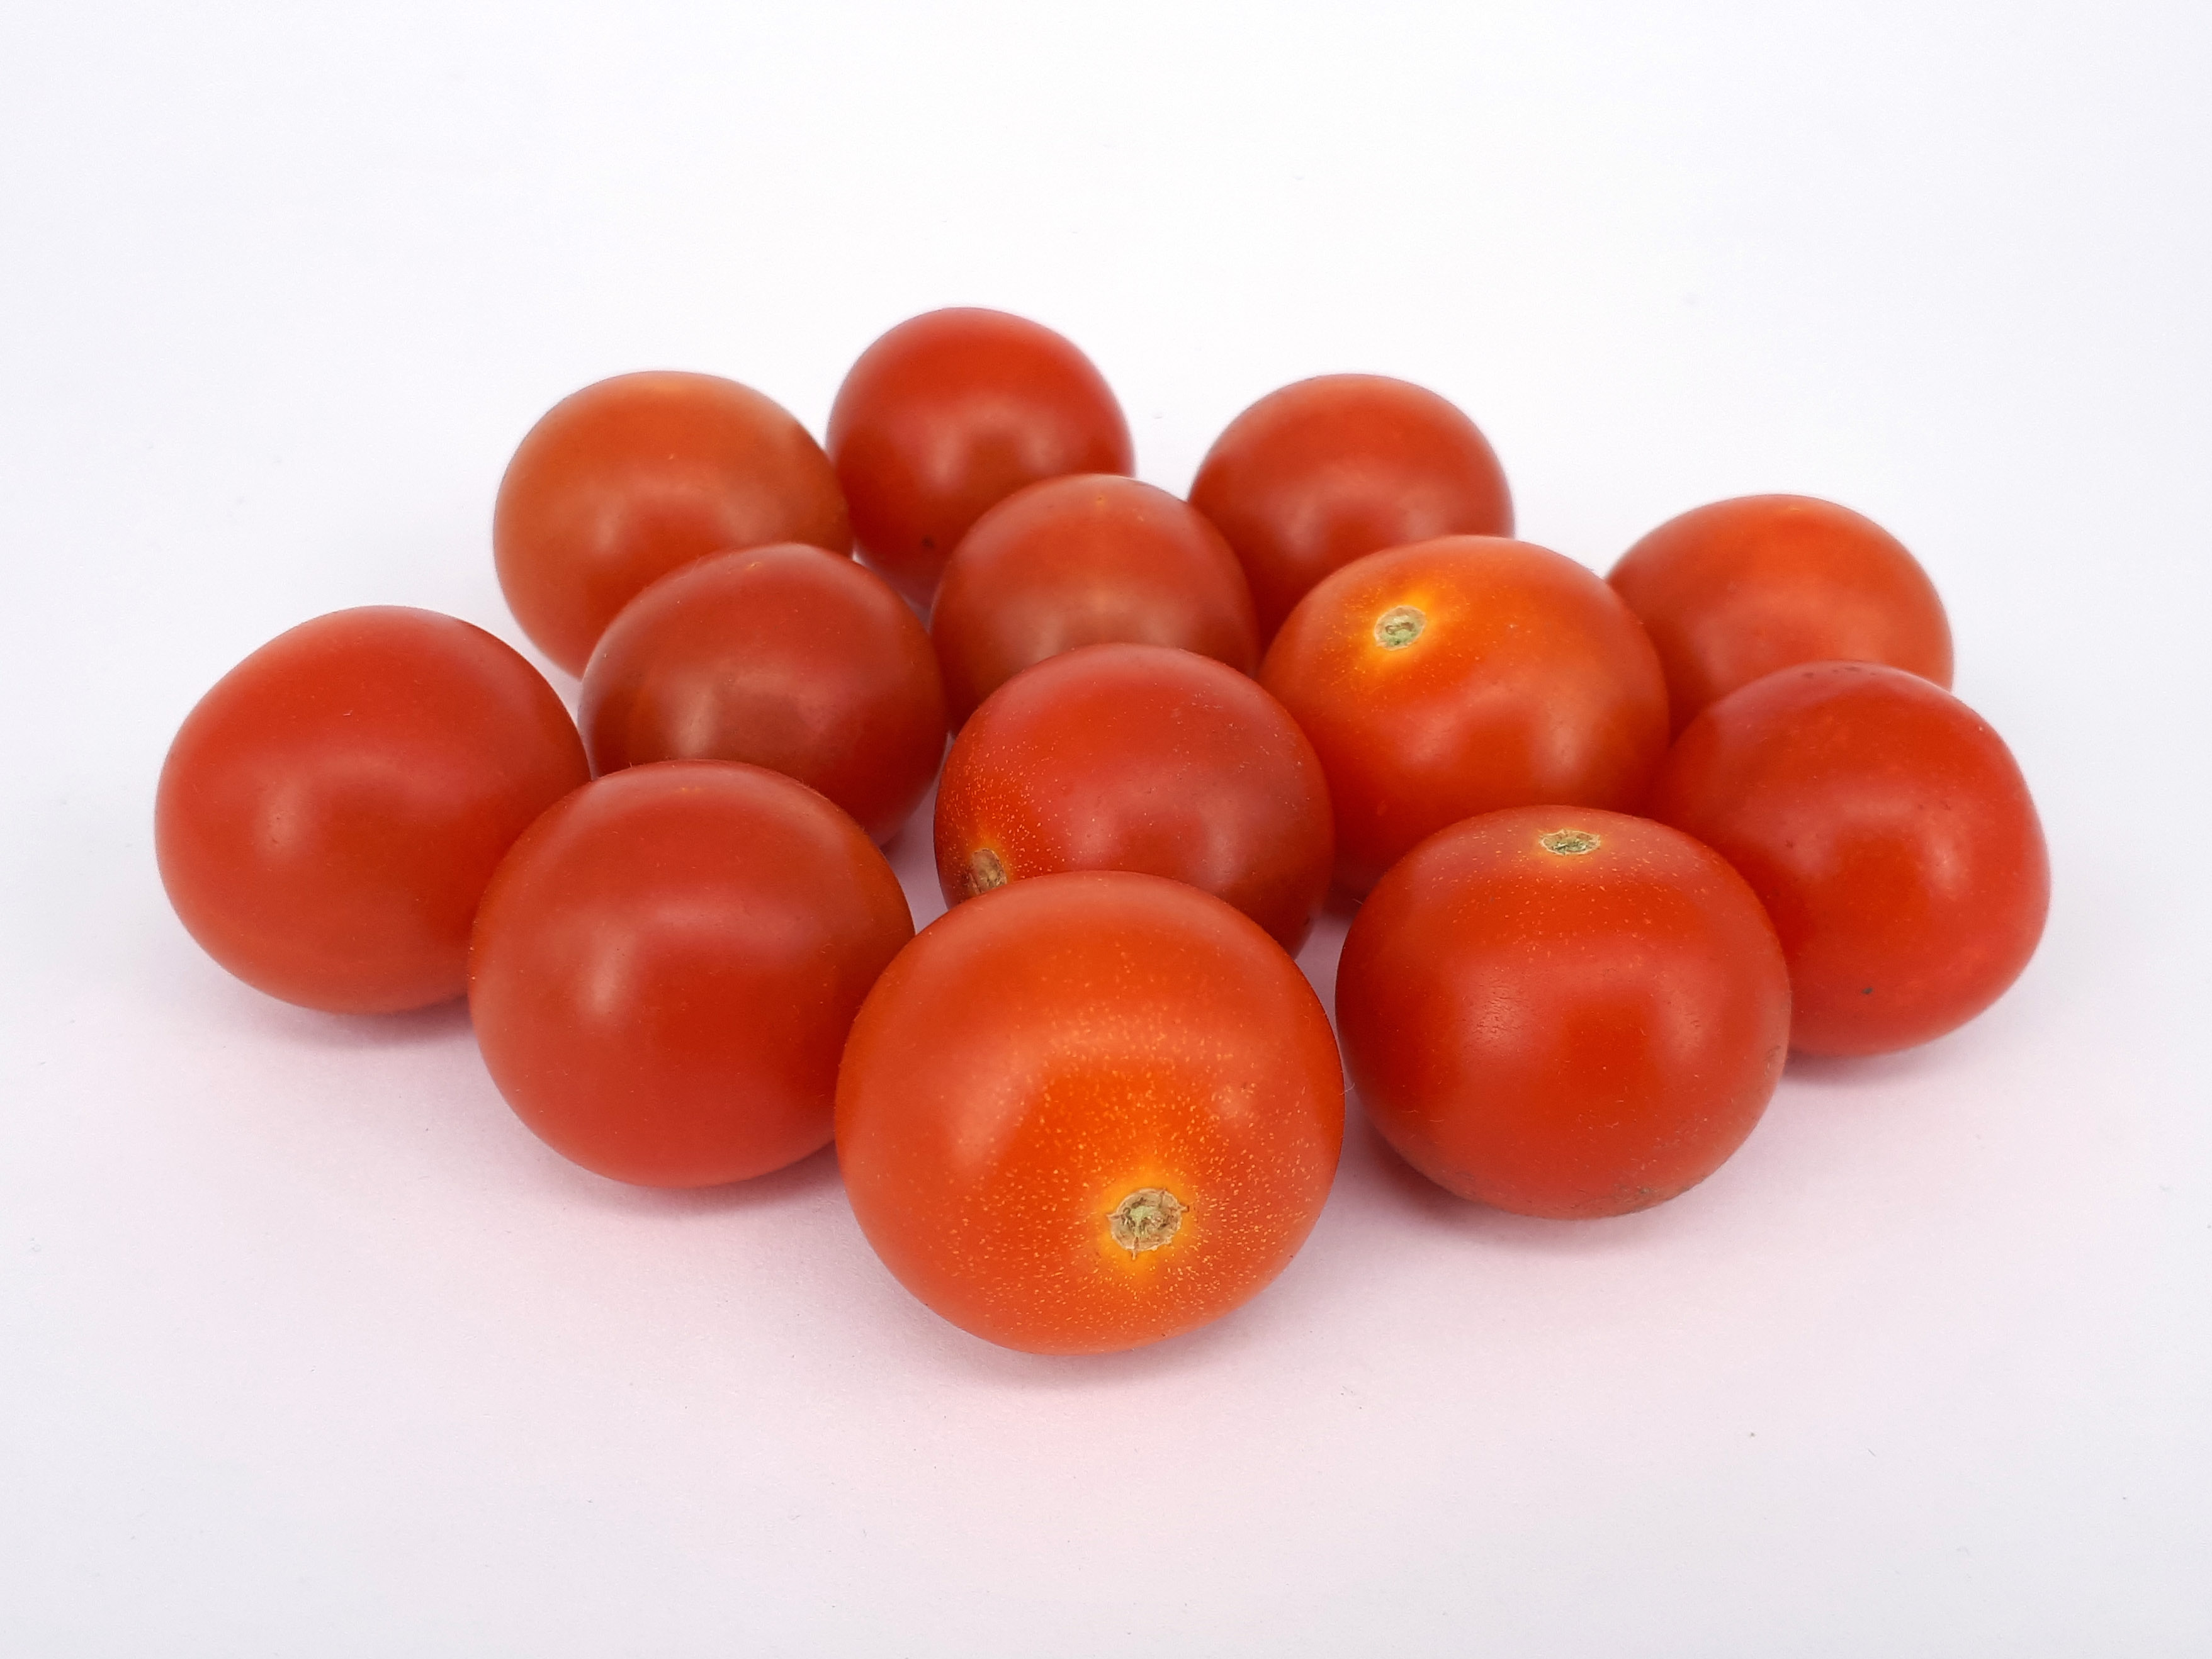 tomatoes benefits